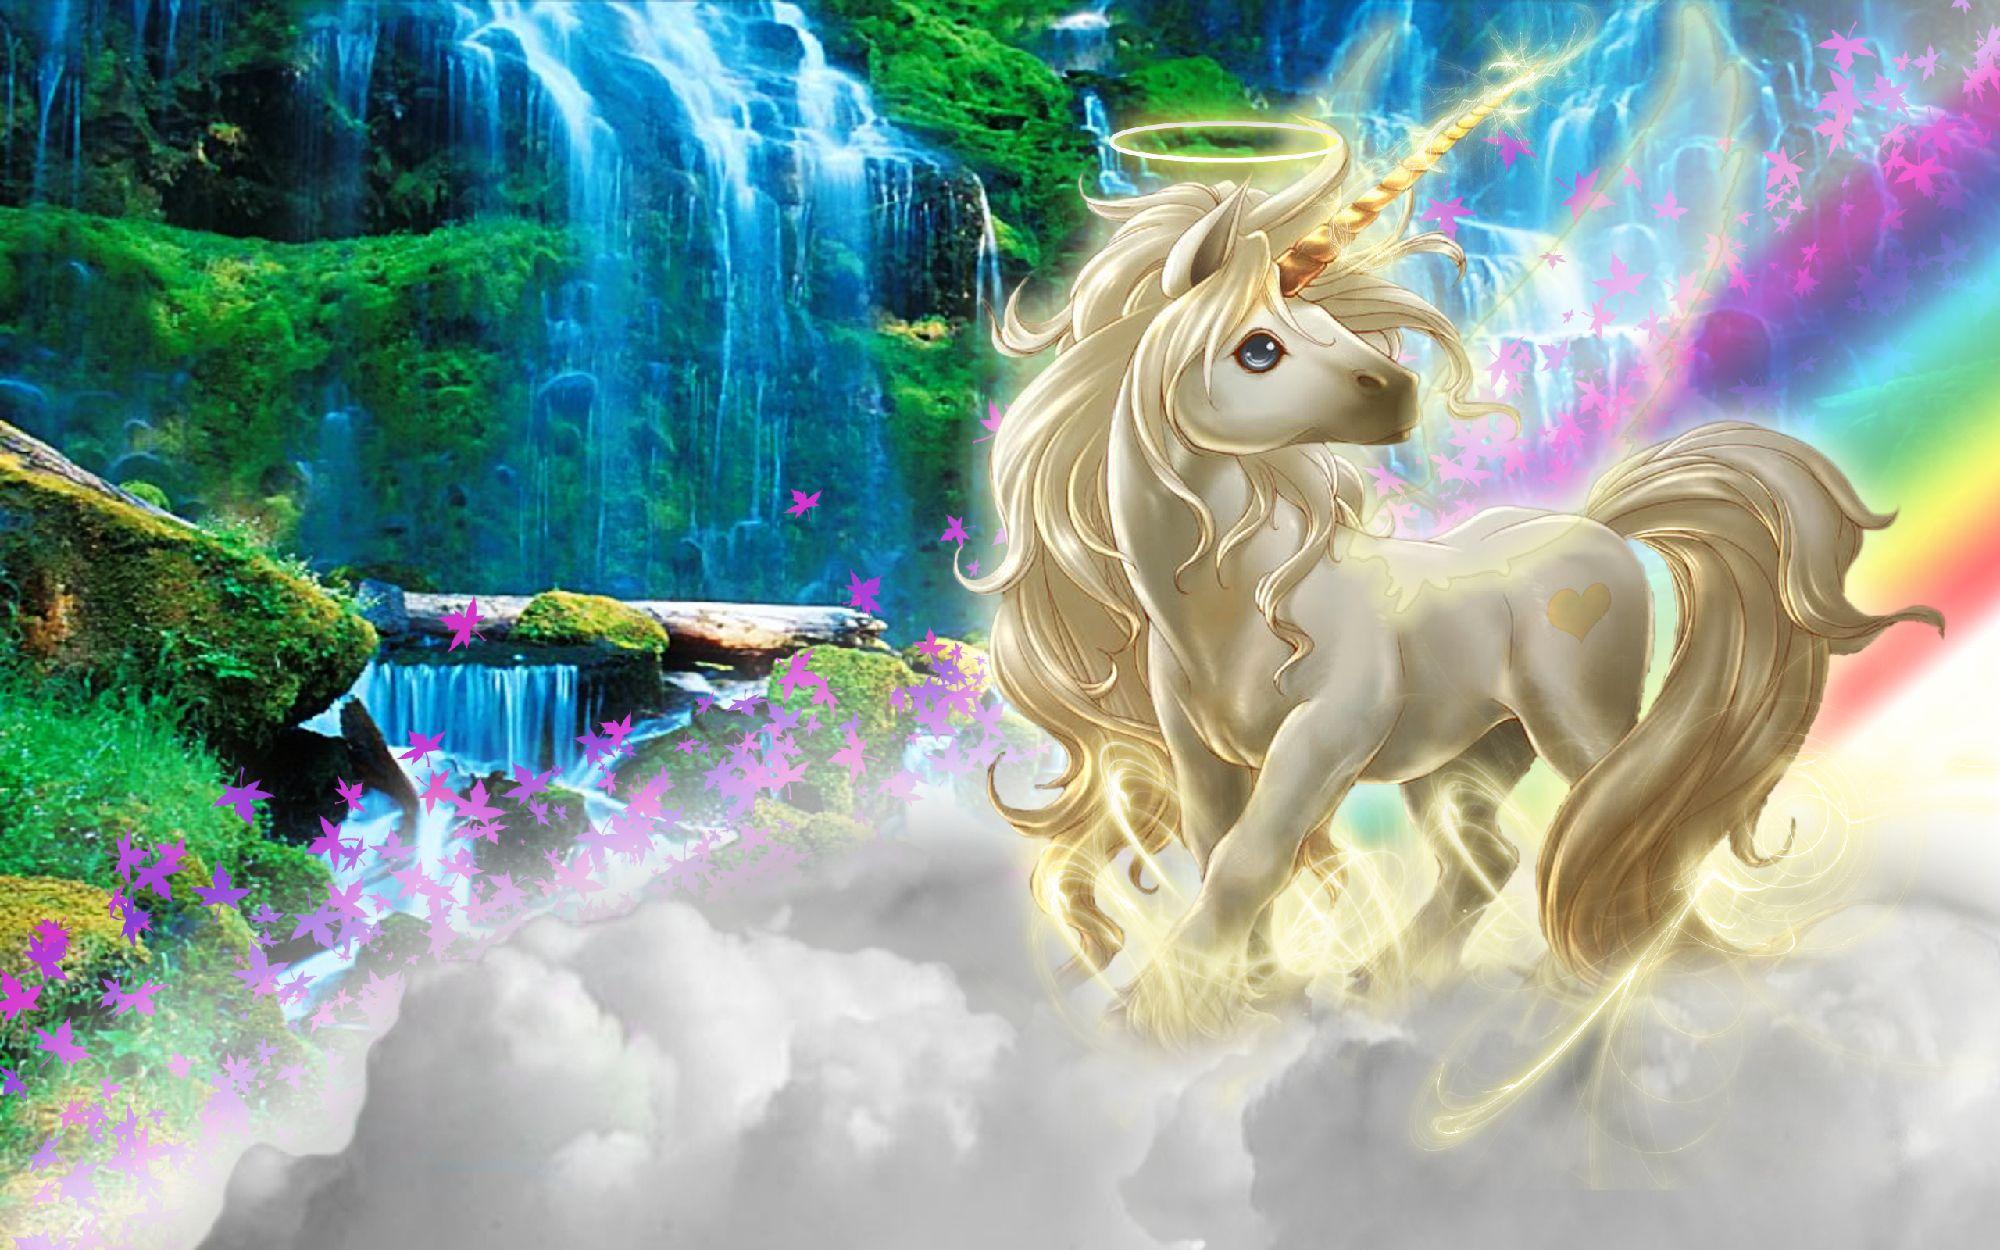 cute unicorns and rainbows wallpaper